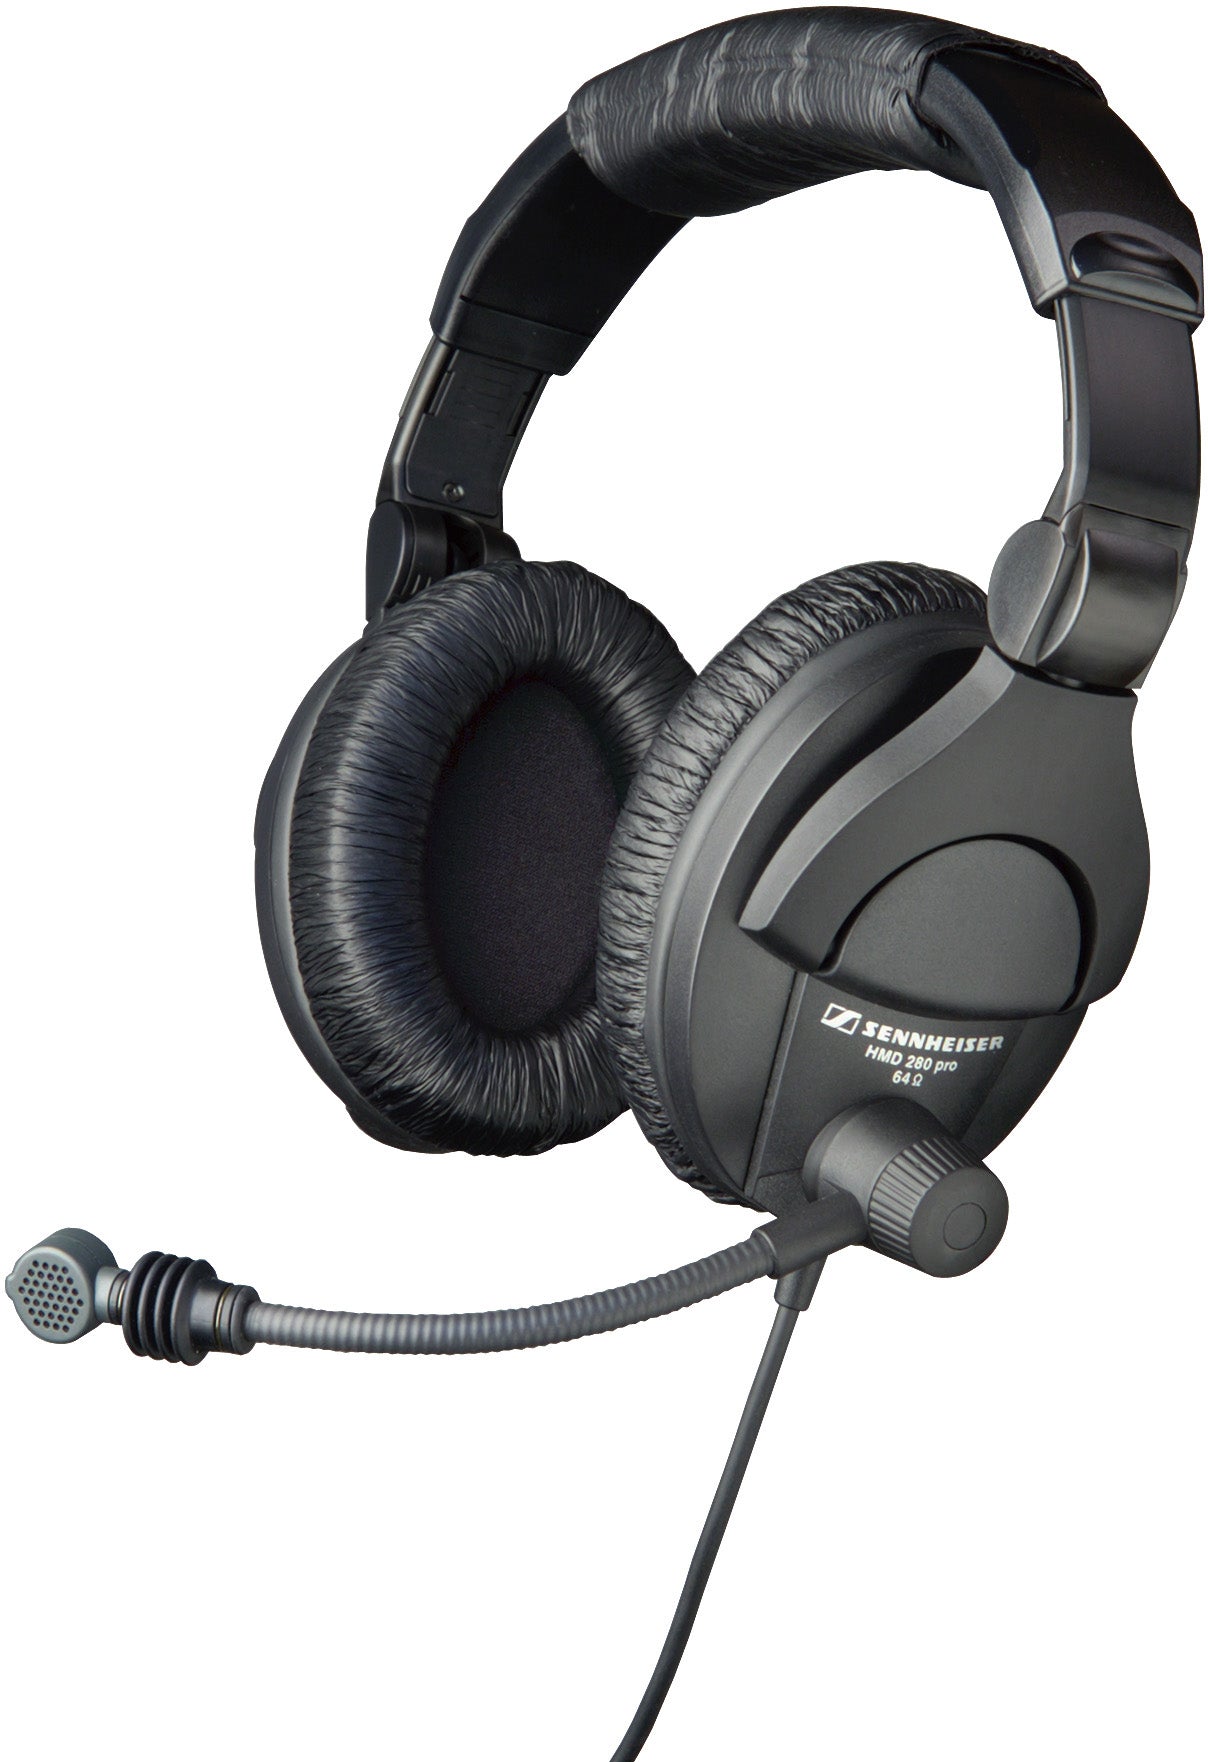 Sennheiser HMD 280 Pro Headphones